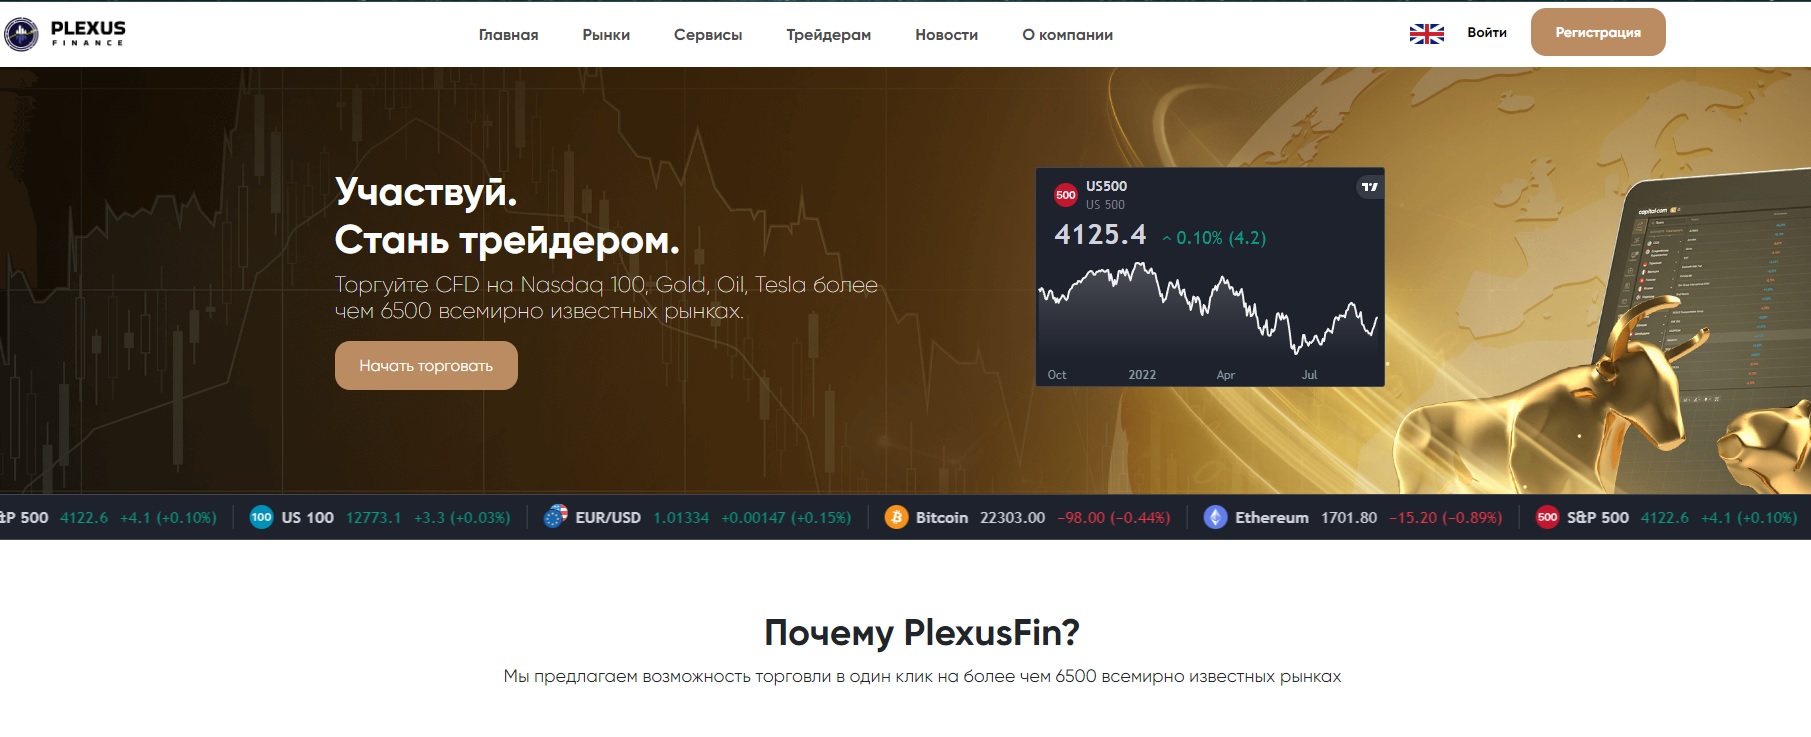 Plexus Finance